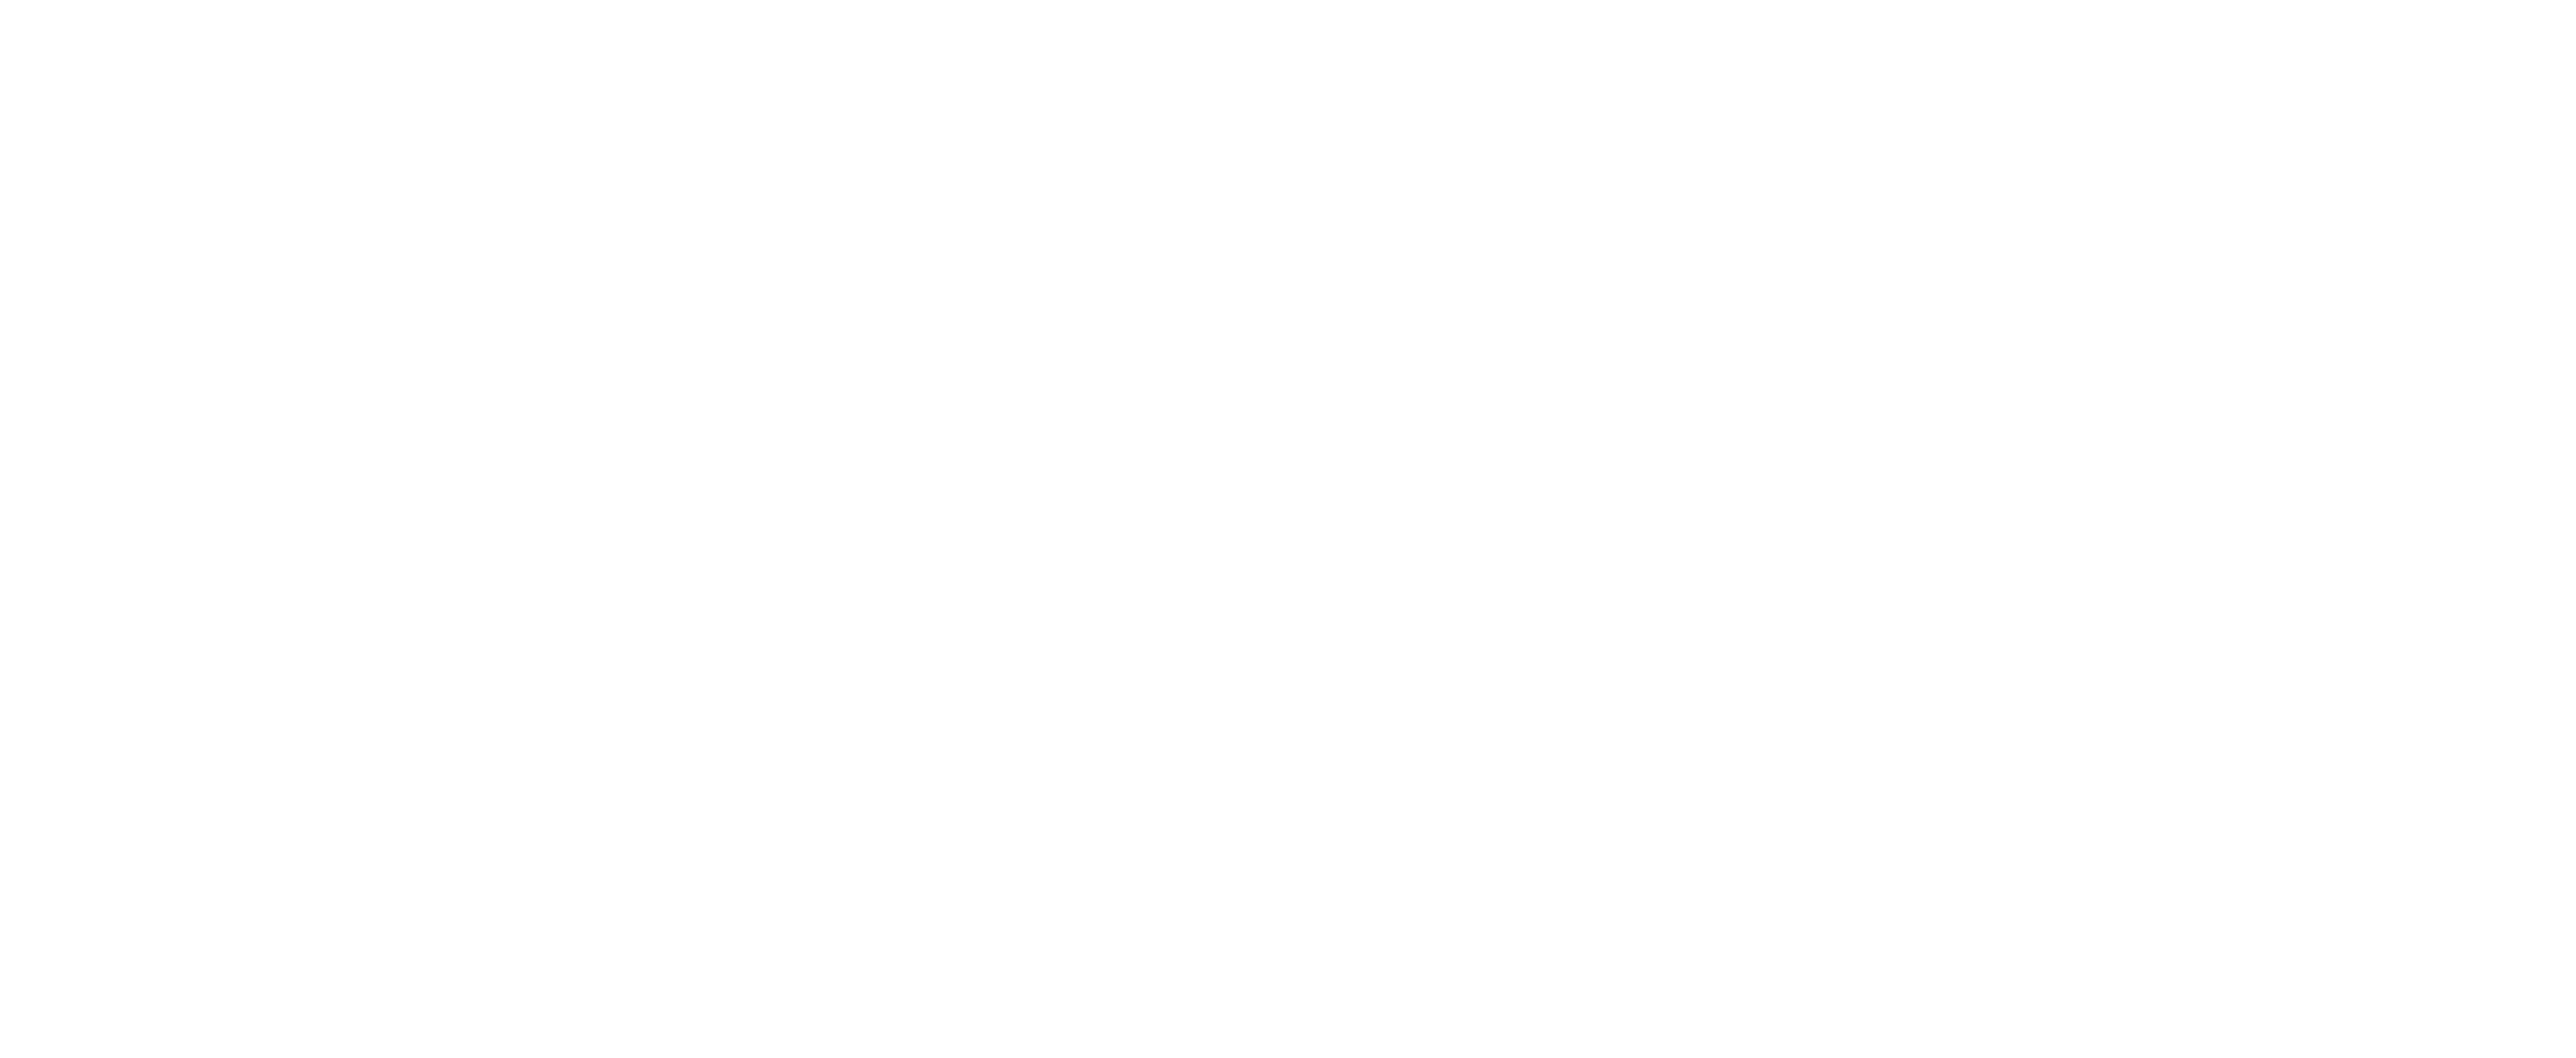 Sydney Children's Hospitals Foundation